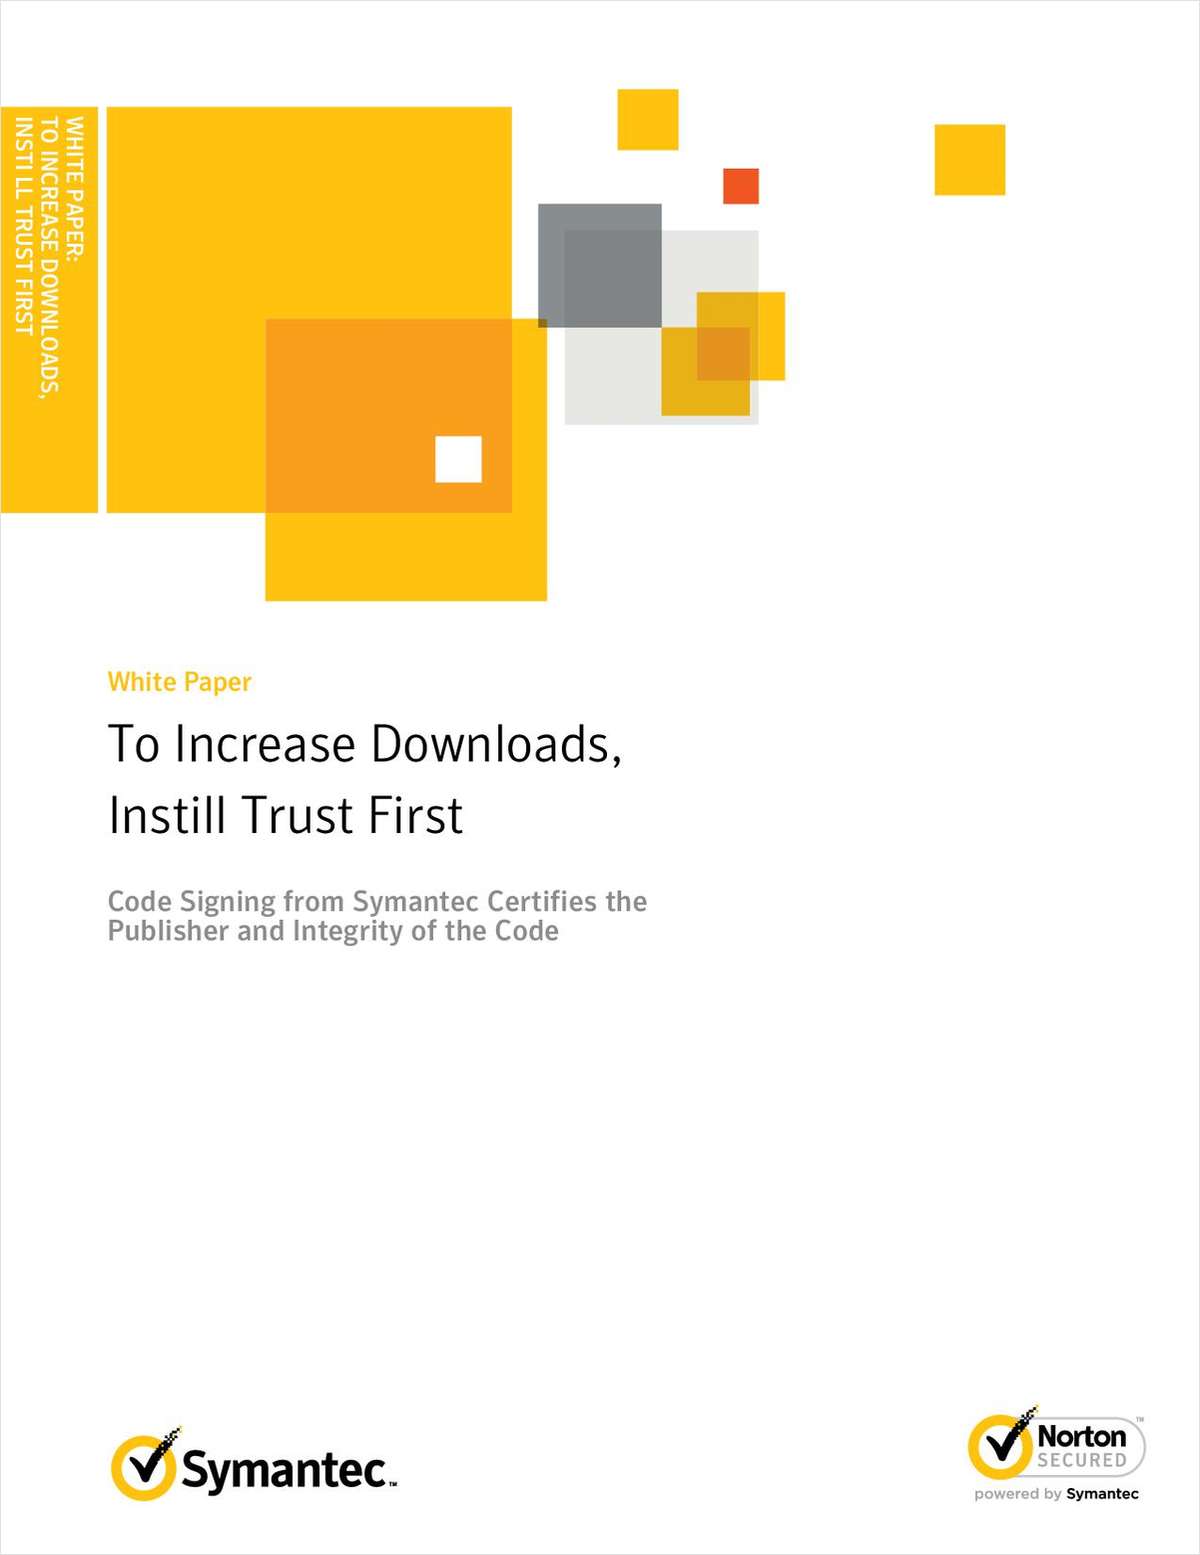 To Increase Downloads Instill Trust First